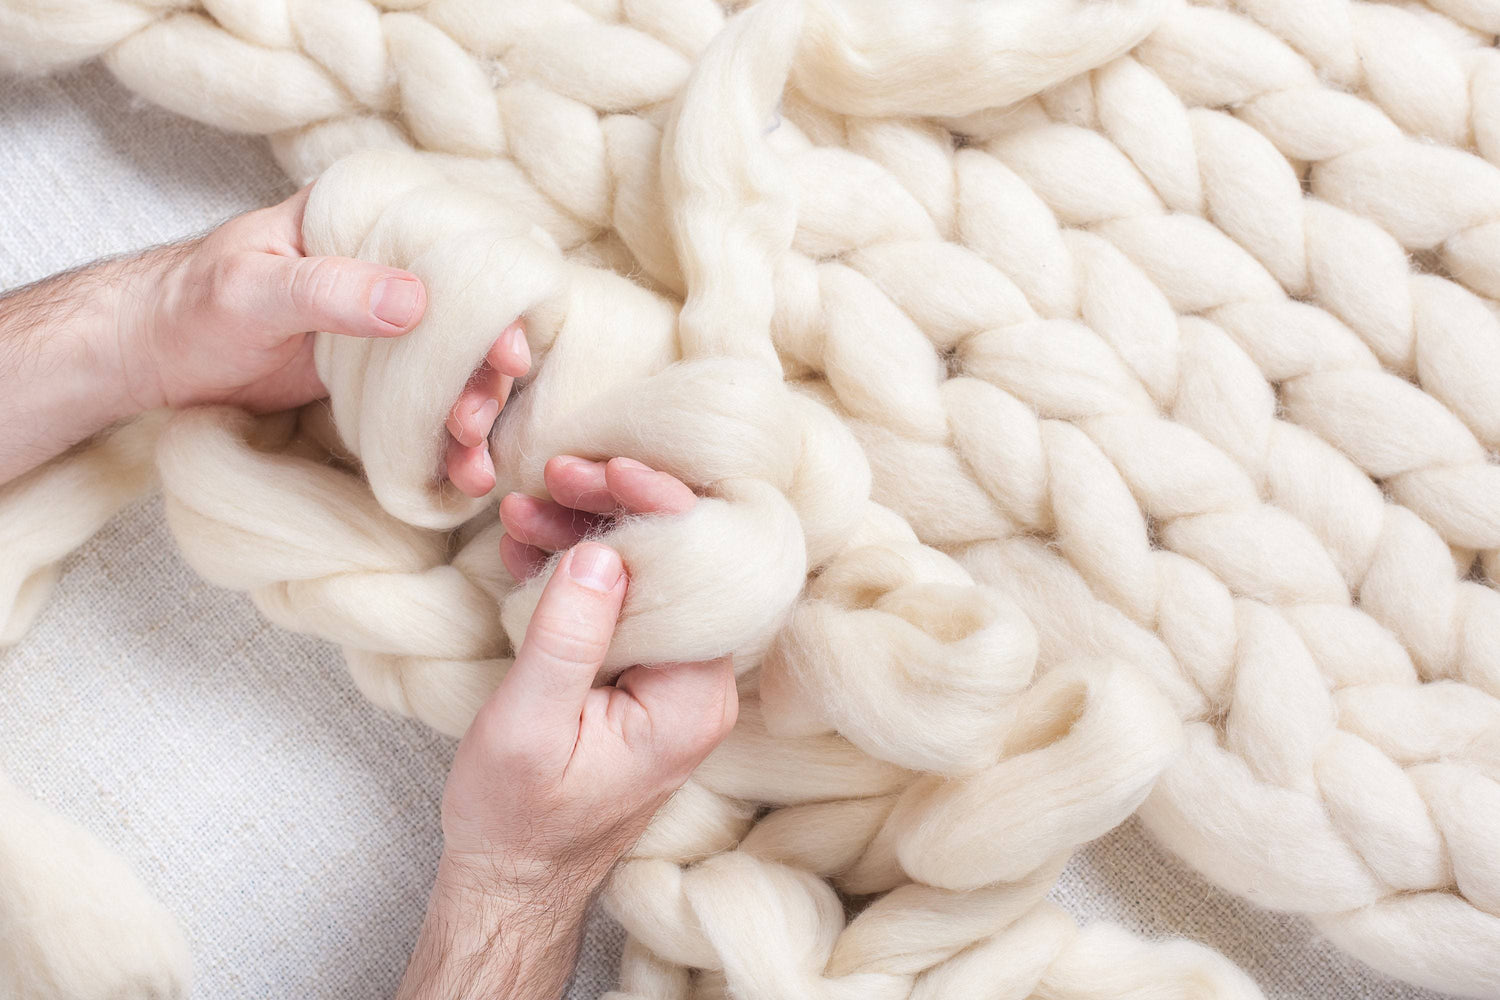 Revolution Fibers Cheviot Wool Roving Top 1 lb (16 Ounces) for Spinning, Soft Chunky Jumbo Yarn for Arm Knitting Blanket